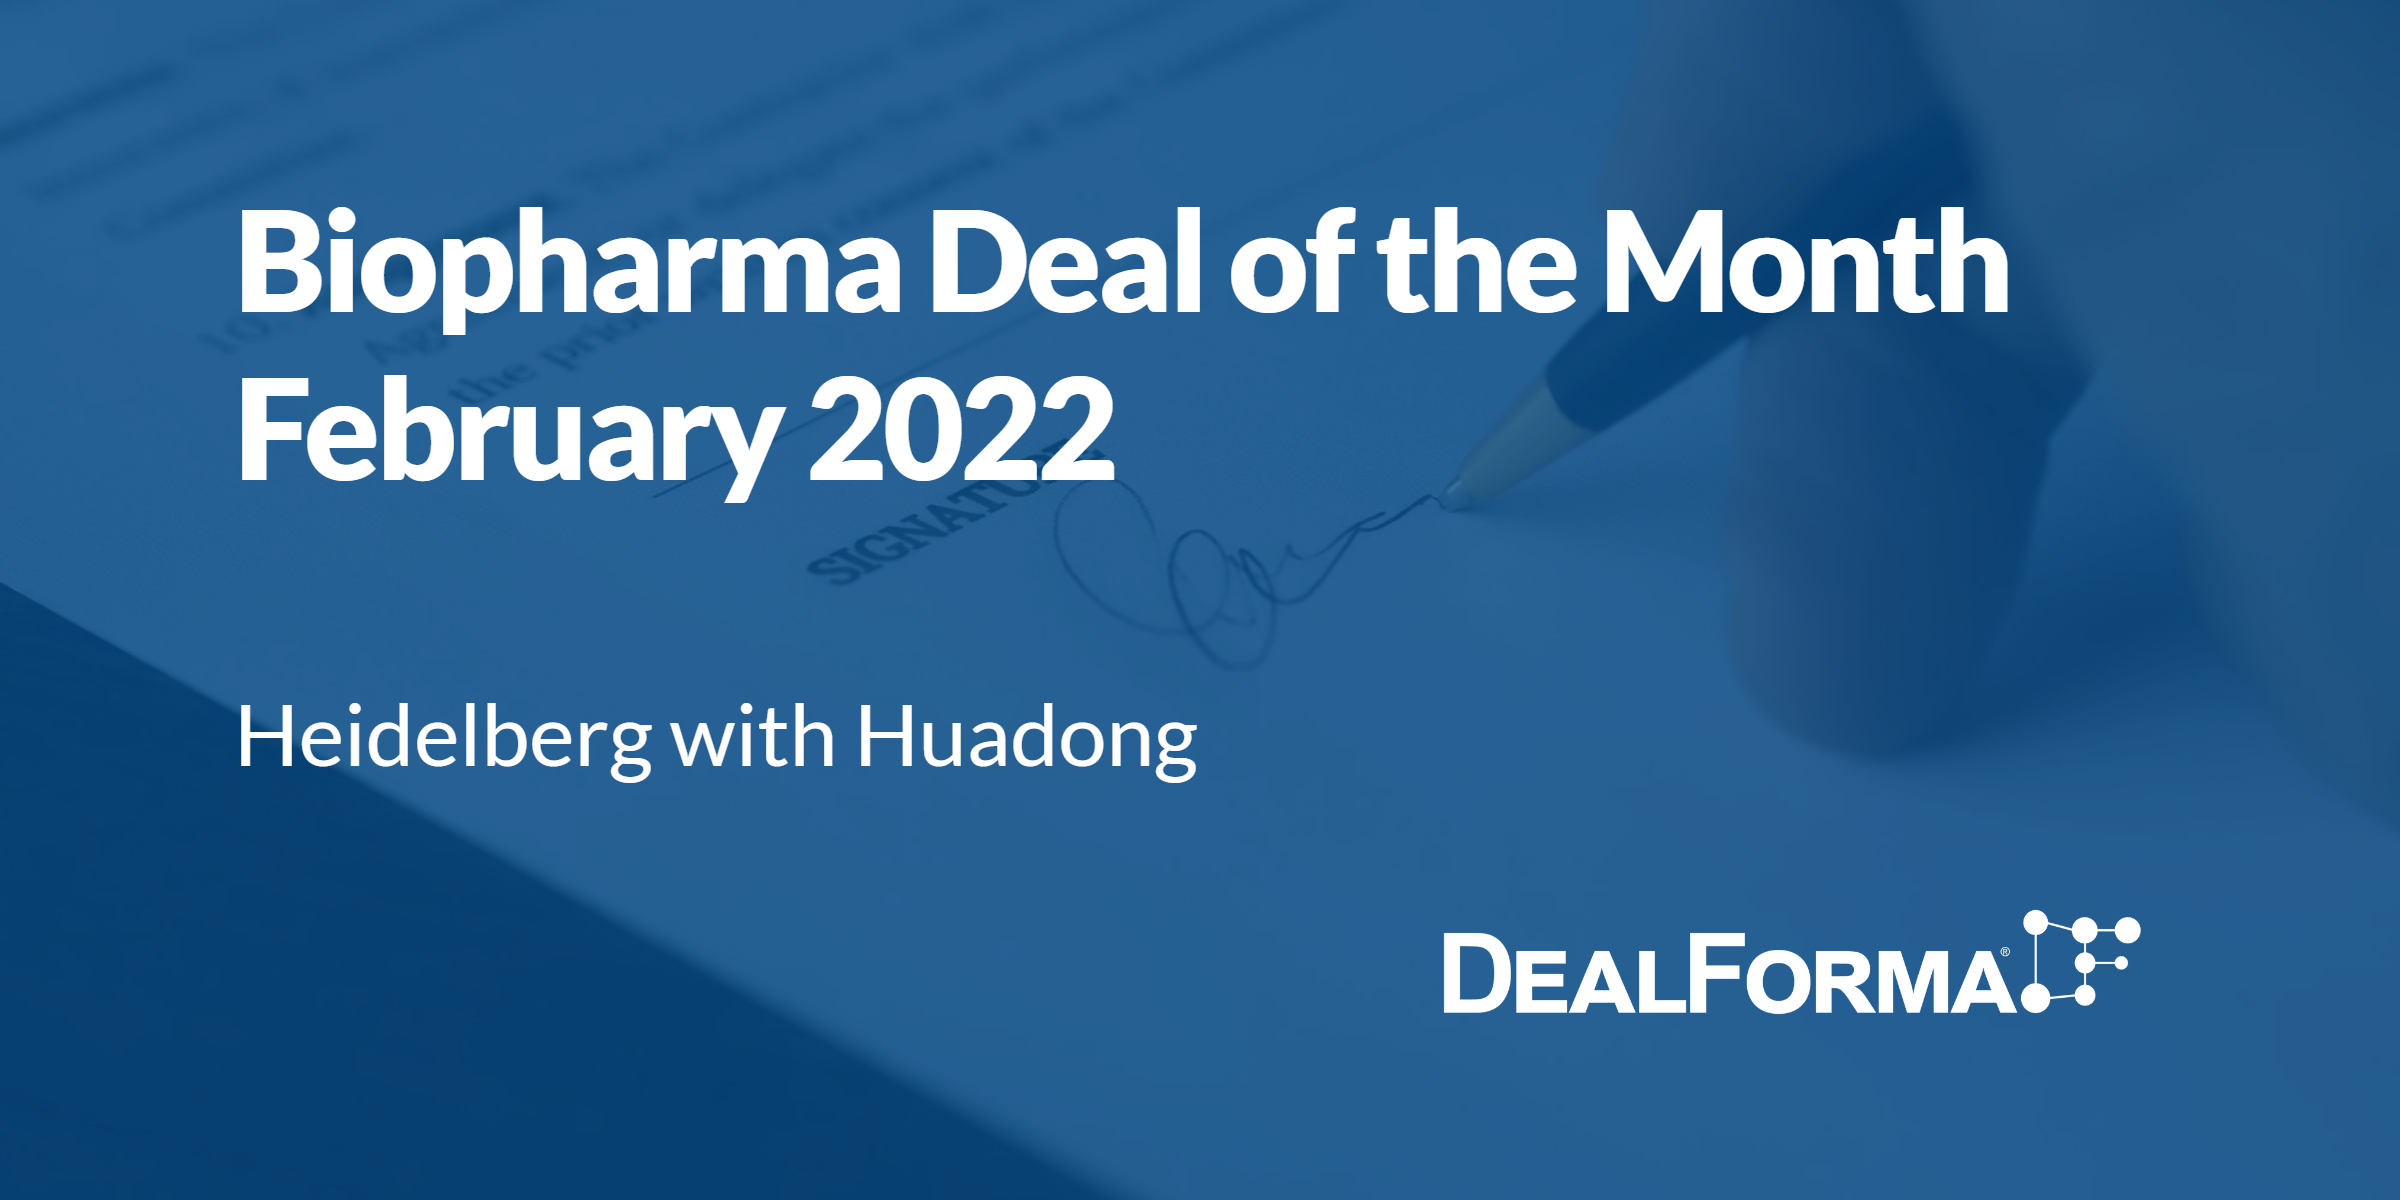 Top biopharma deal upfront February 2022